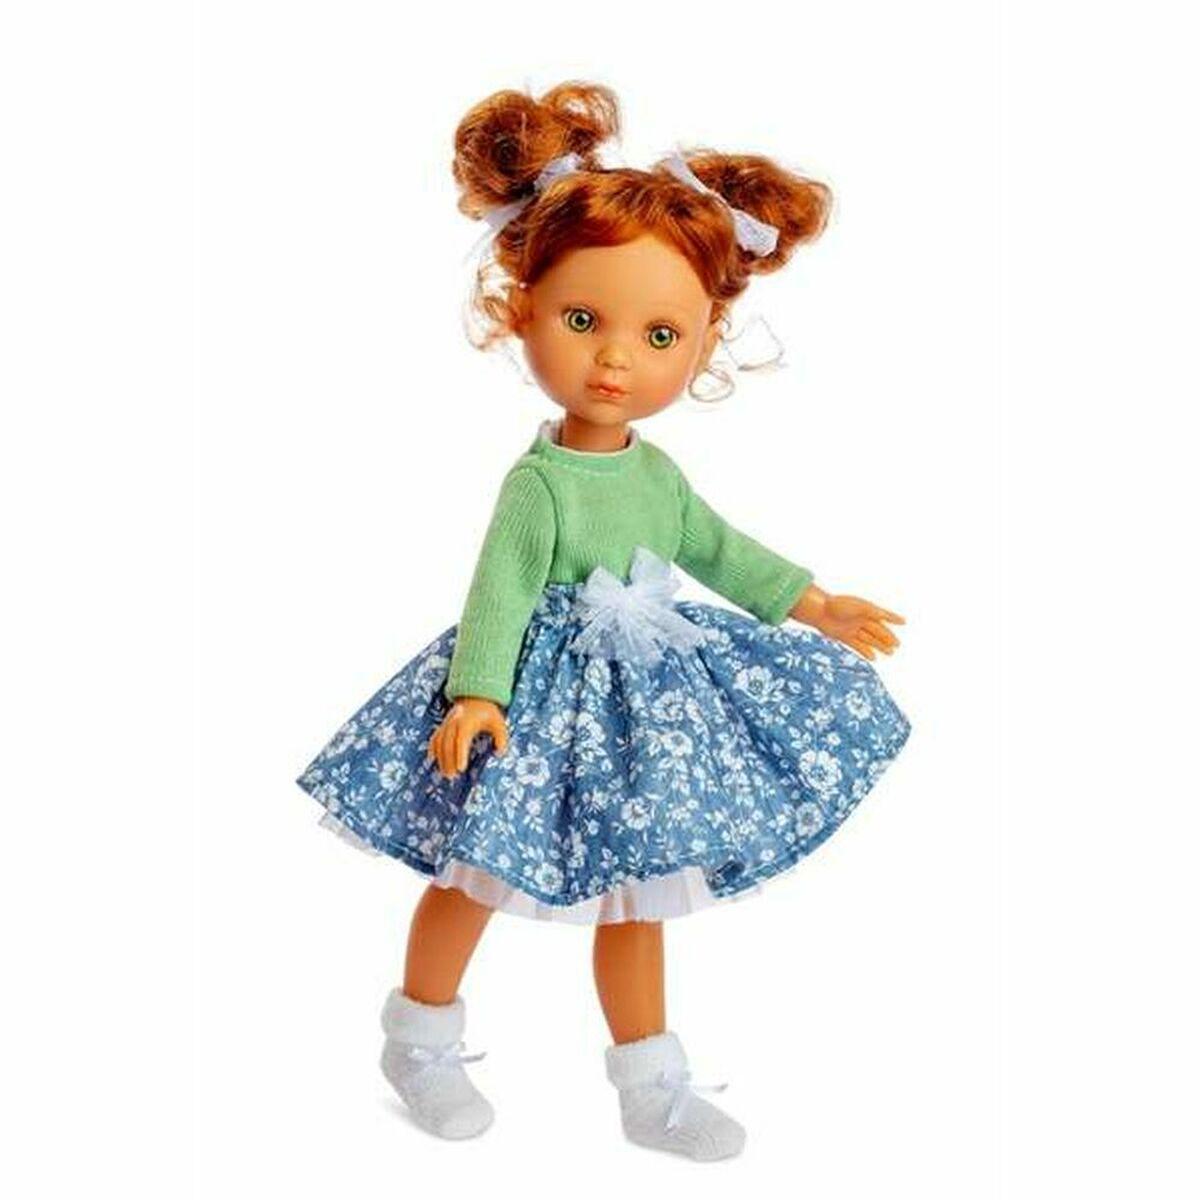 Baby doll Berjuan Eva Redhead Green Jersey 35 cm - VirtuousWares:Global